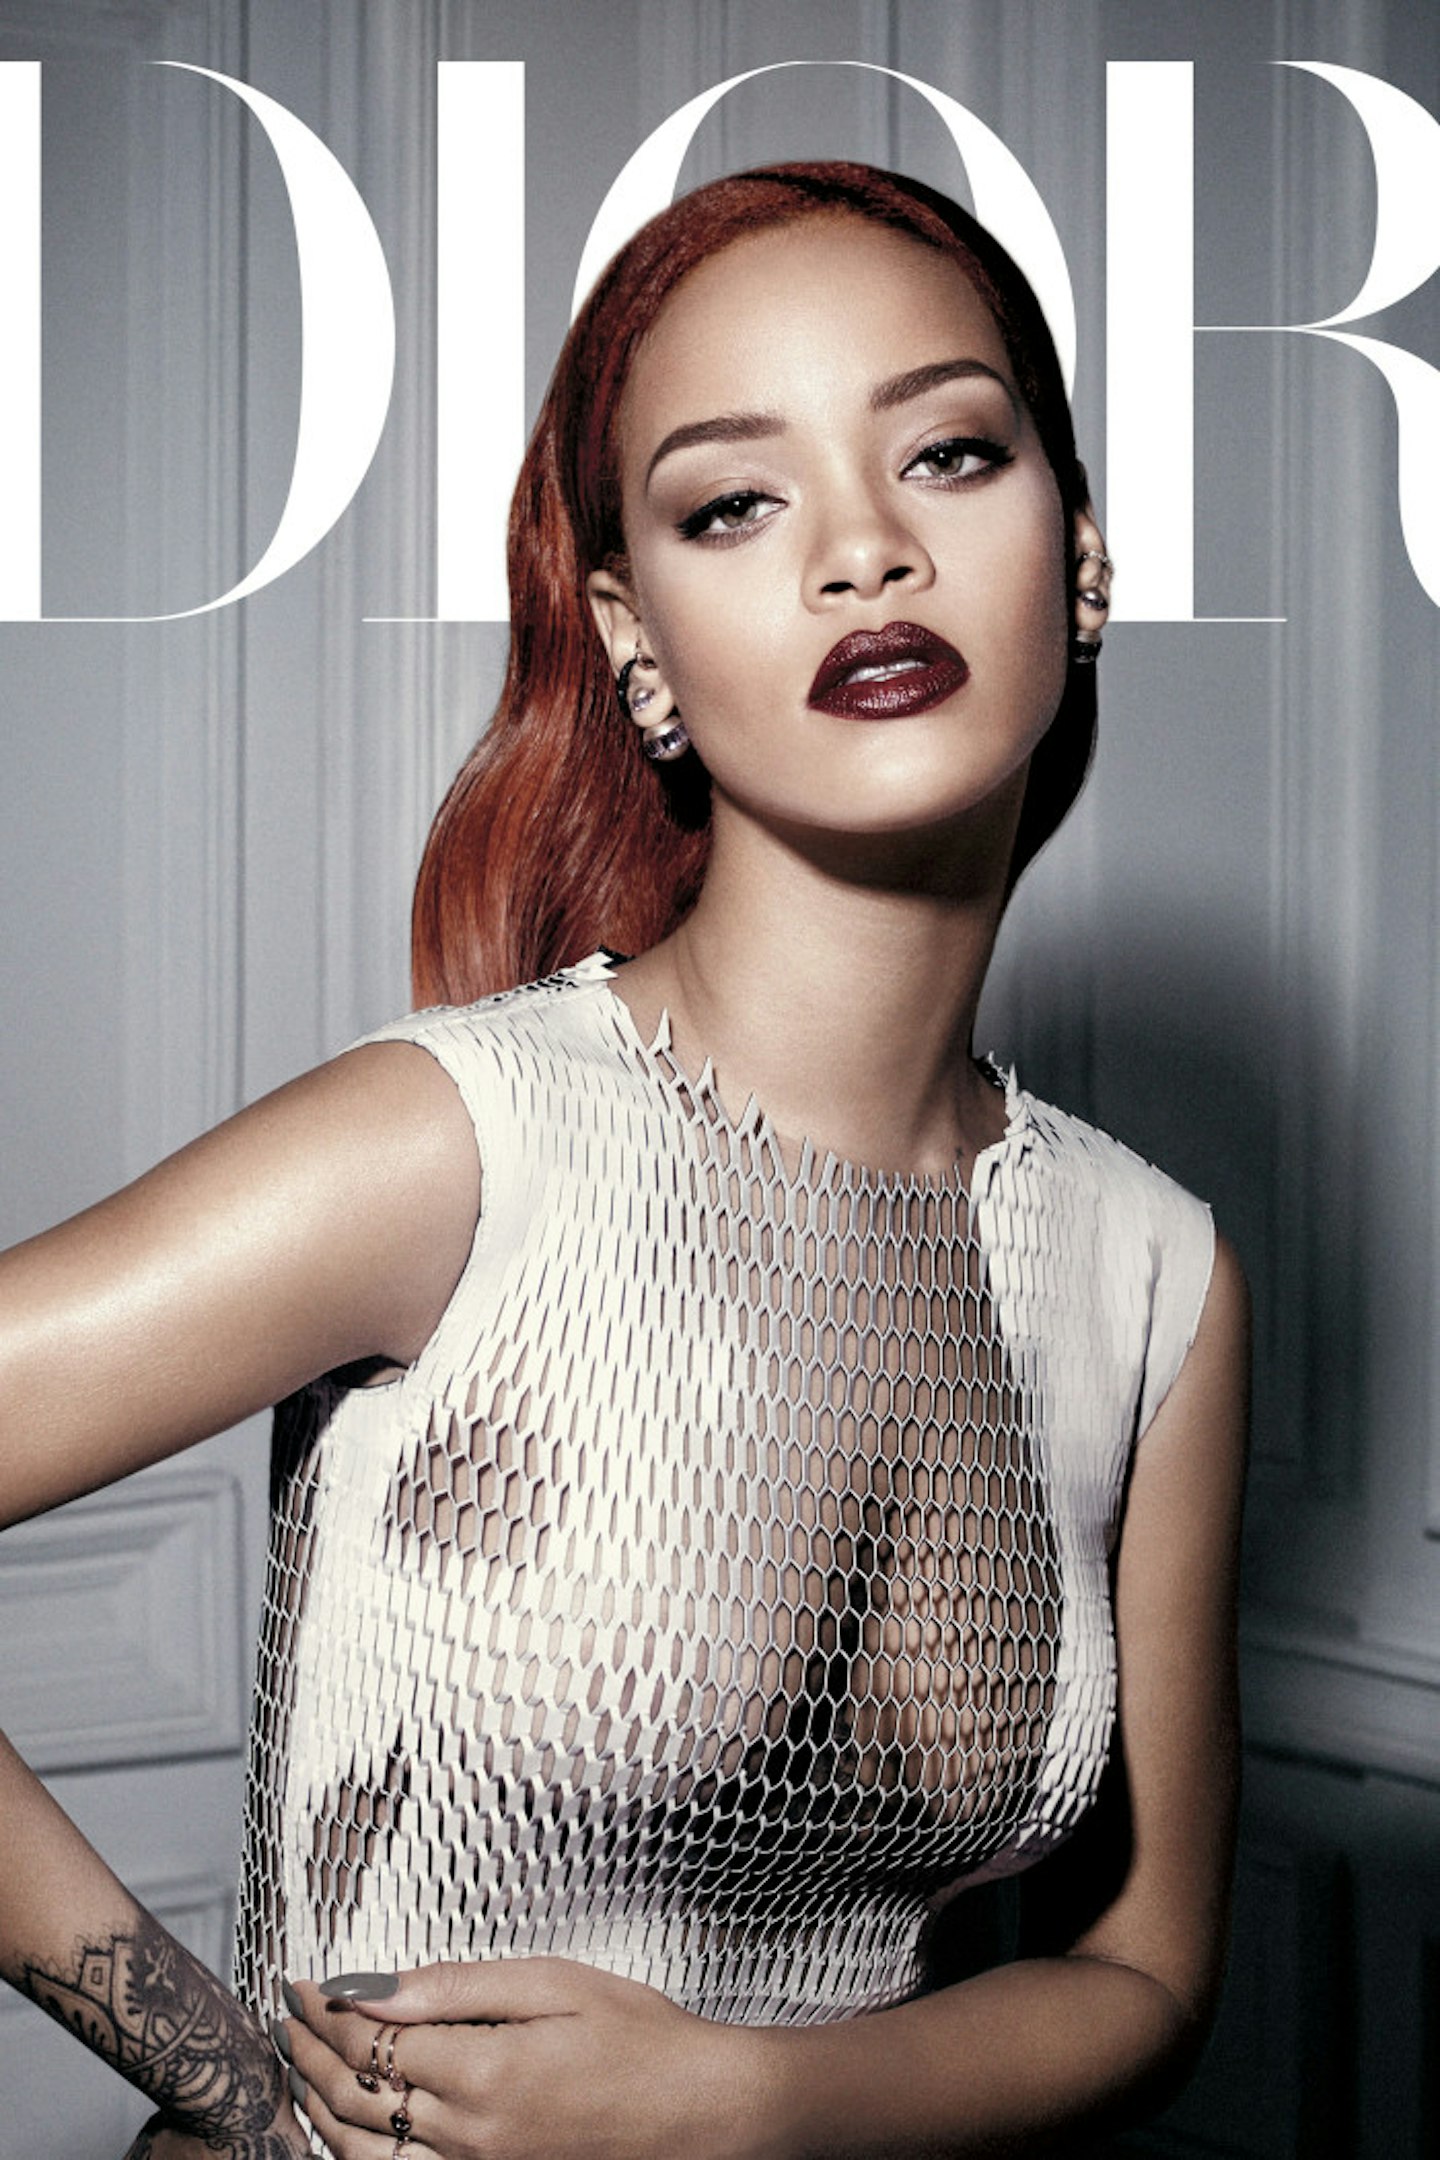 Watch Rihanna's Secret Garden film for Dior